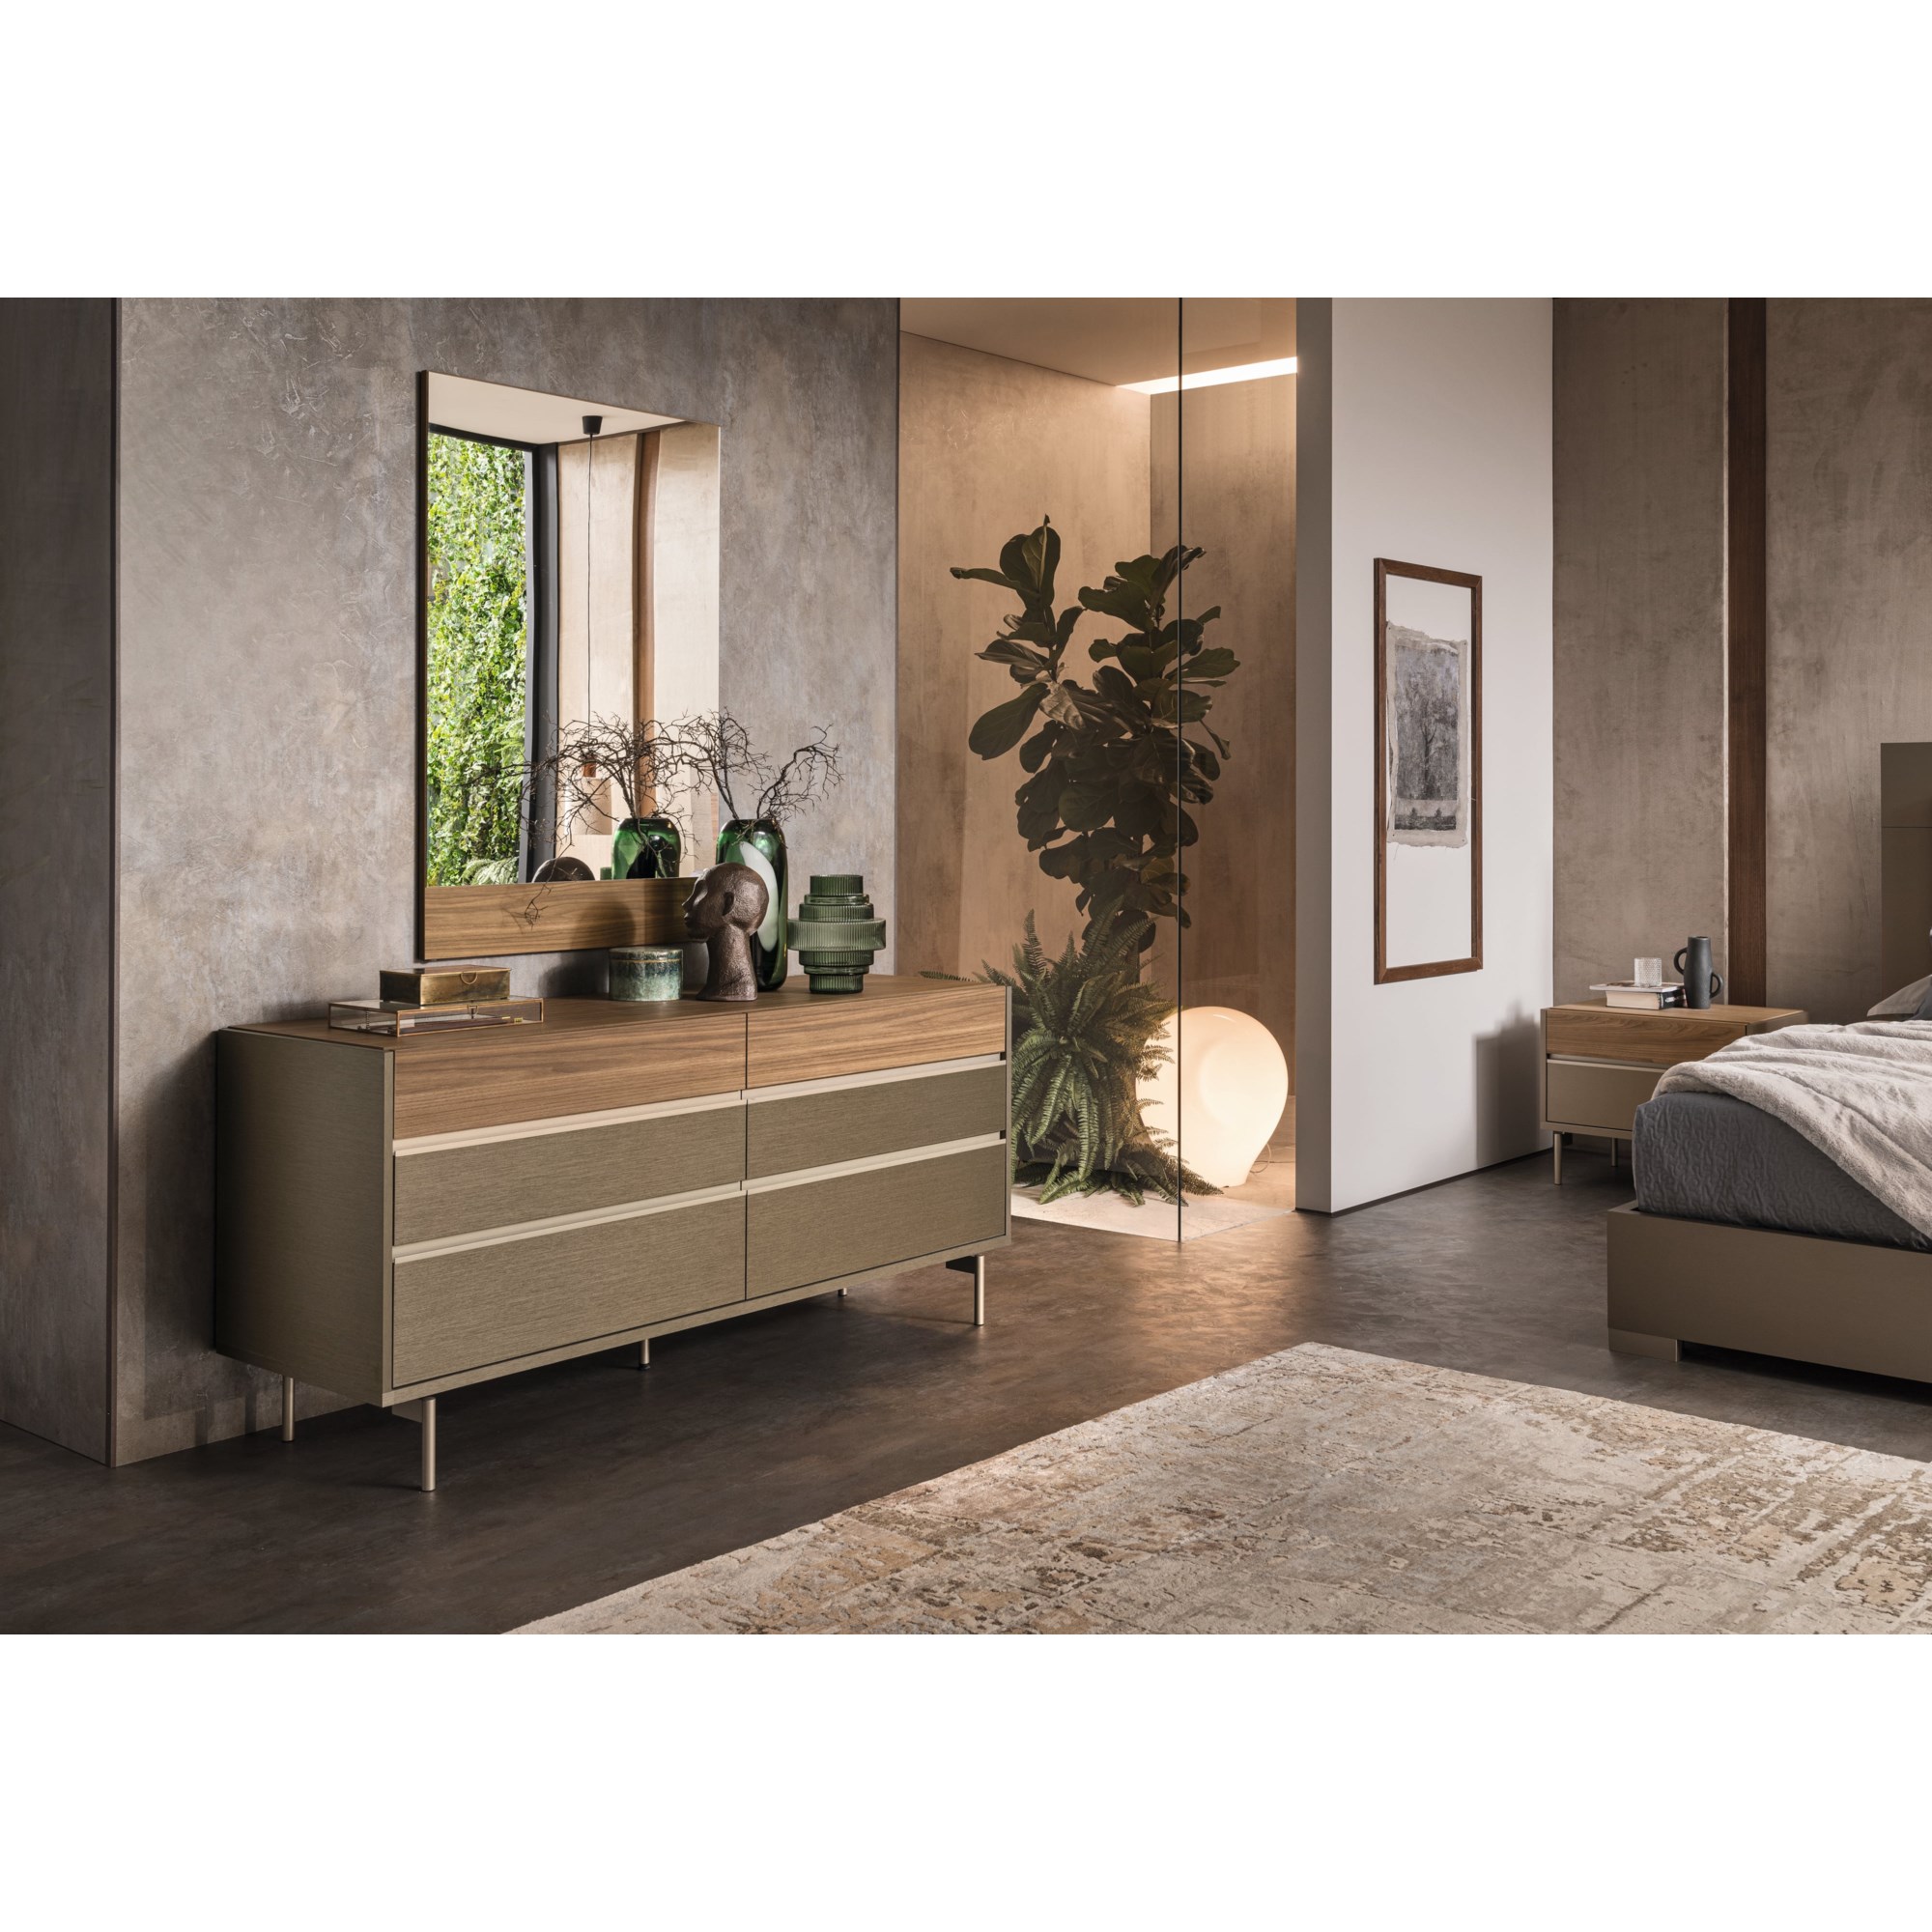 Alf Italia City Life KJCY120 6 Drawer Dresser, HomeWorld Furniture